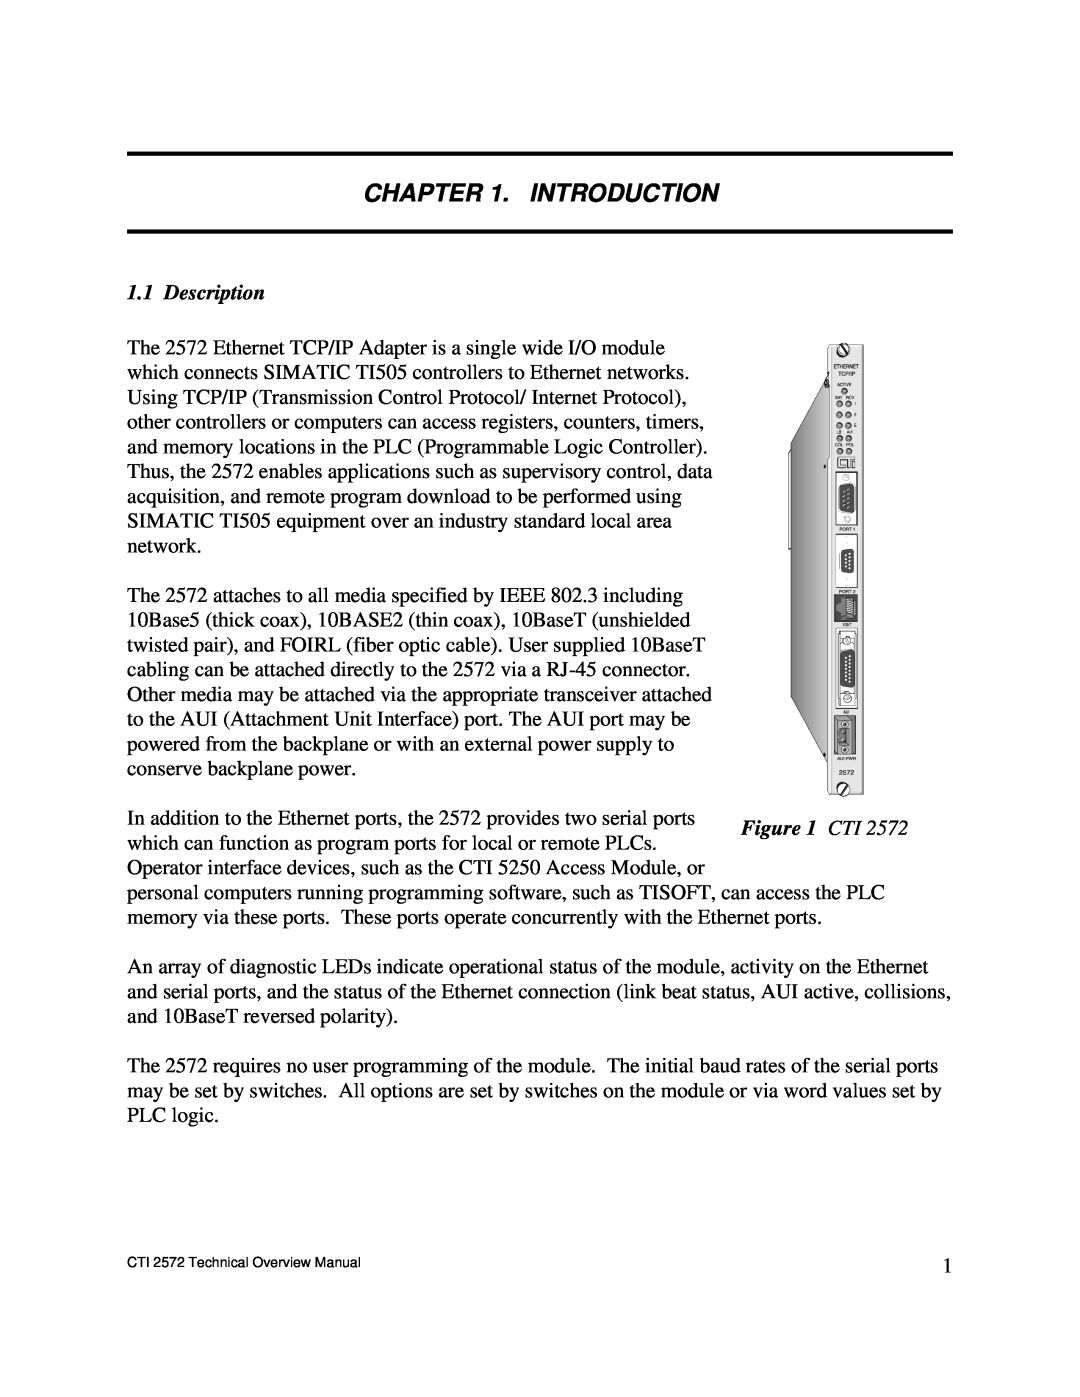 IBM CTI 2572 manual Introduction, Description, Cti 